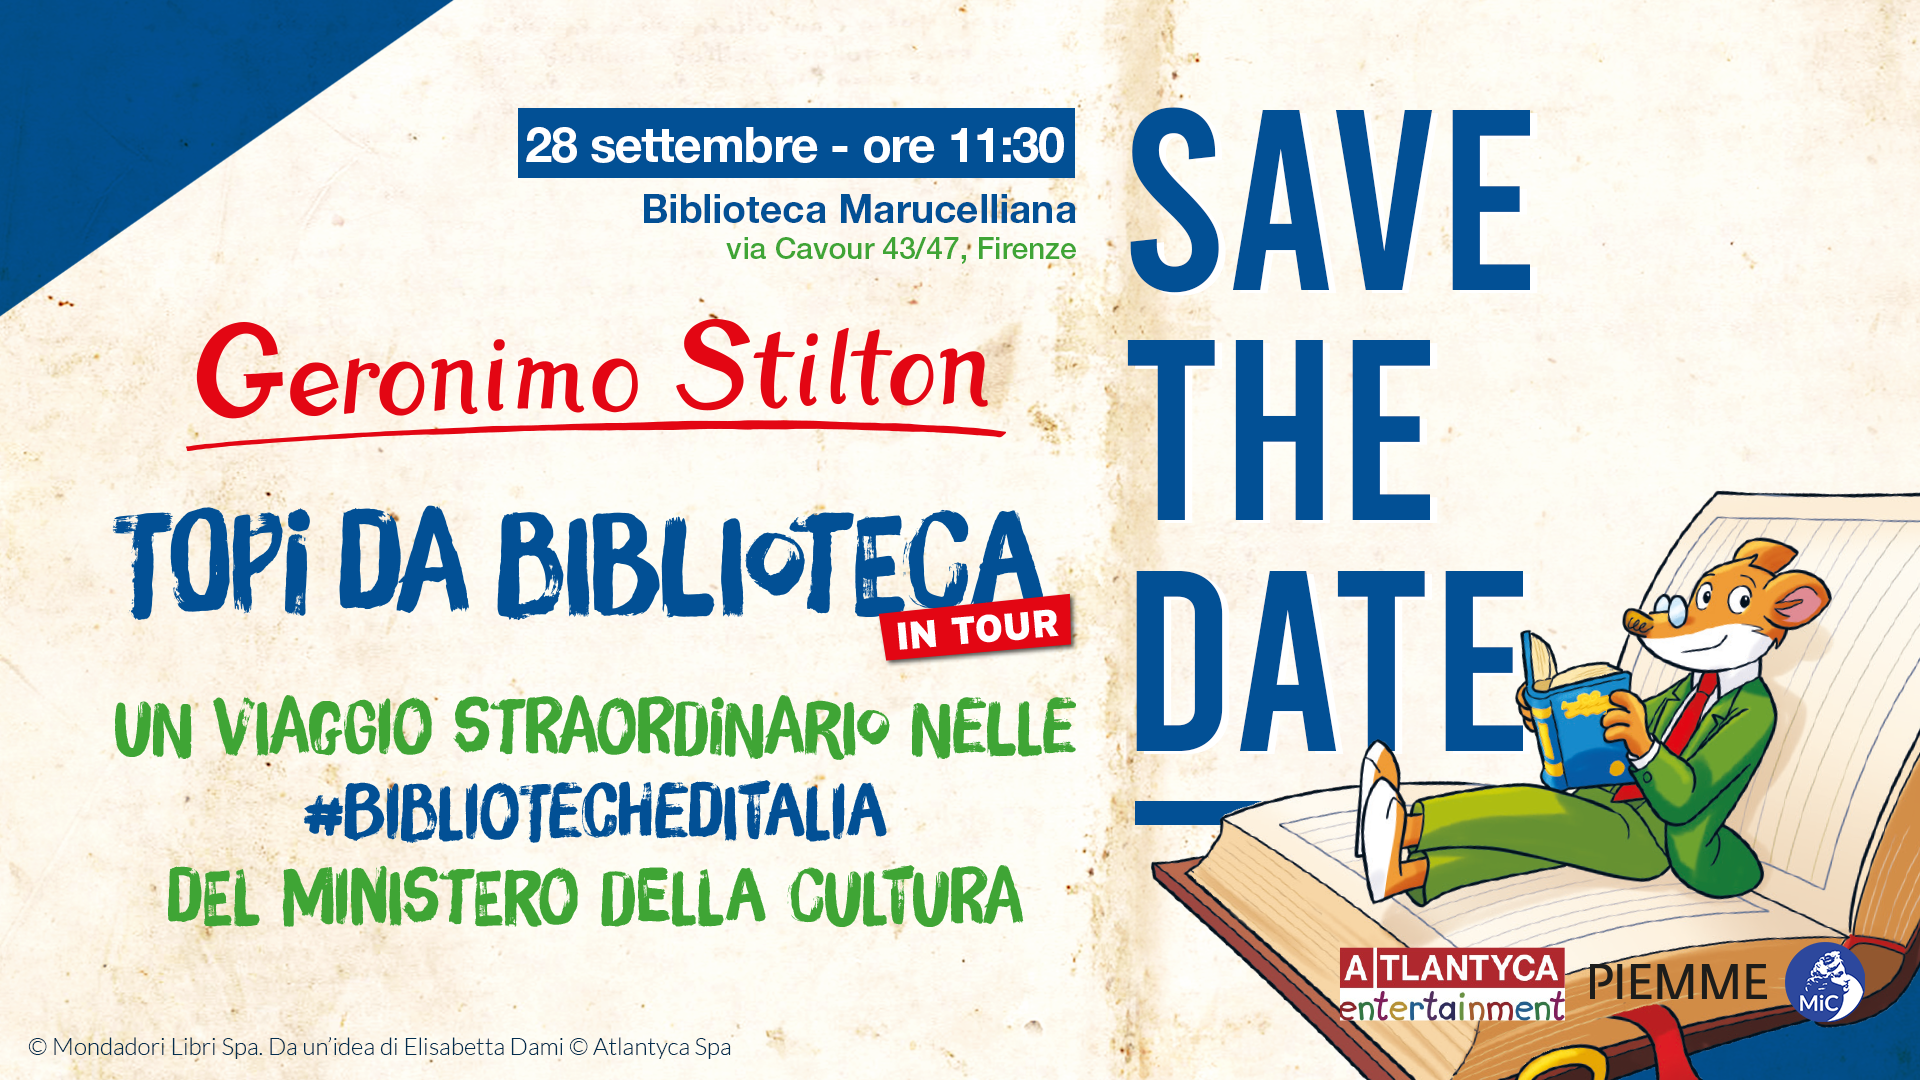 Biblioteca Marucelliana di Firenze Geronimo Stilton Biblioteche d'Italia